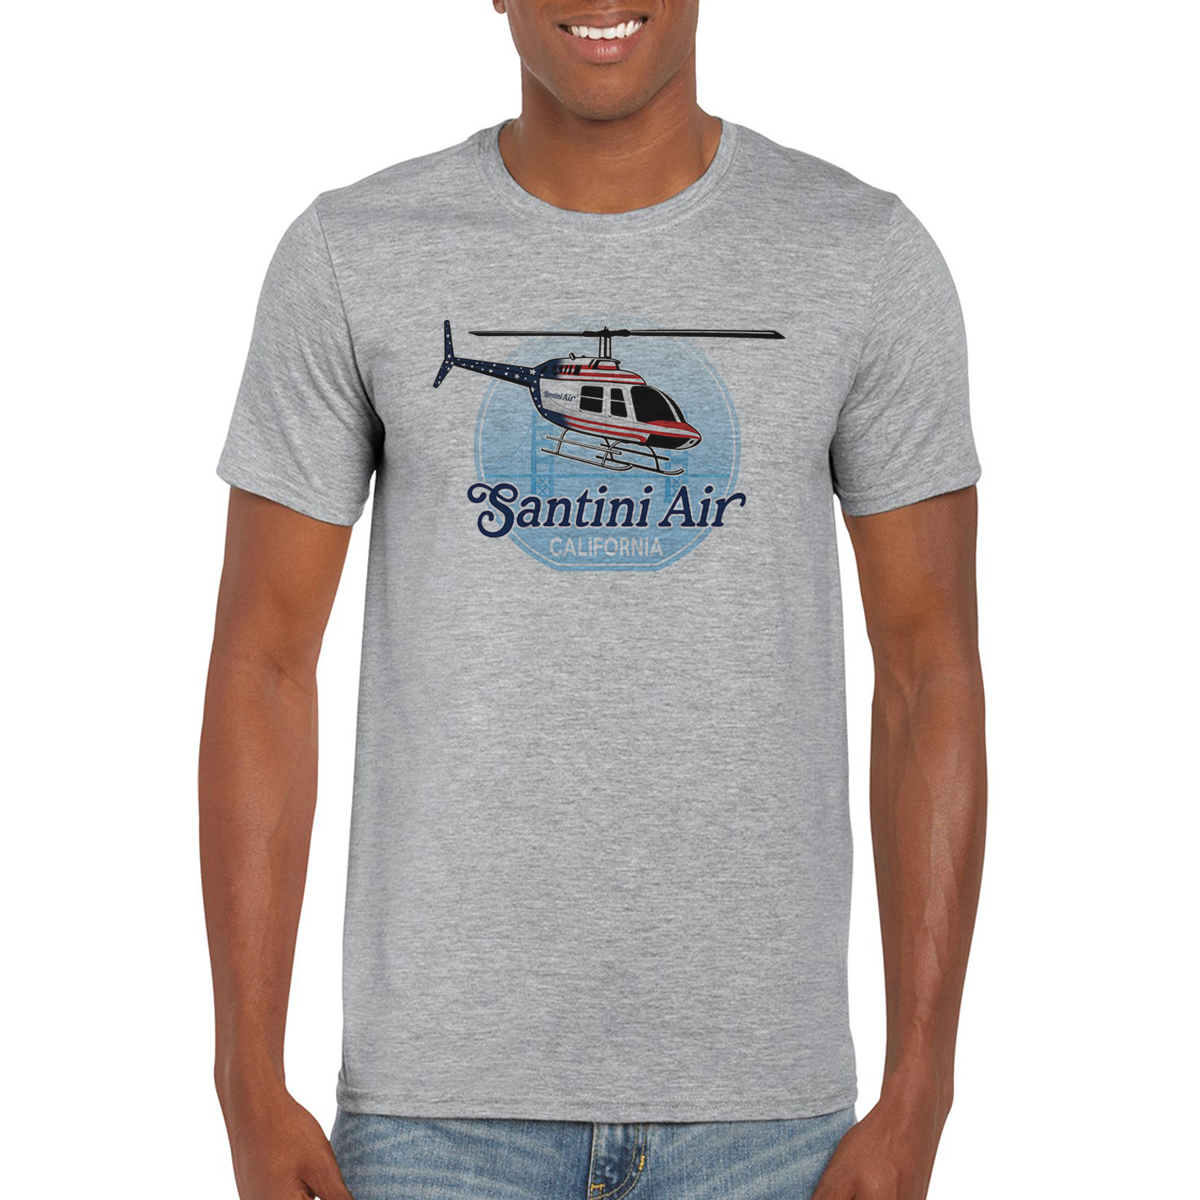 SANTINI AIR CALIFORNIA T-Shirt